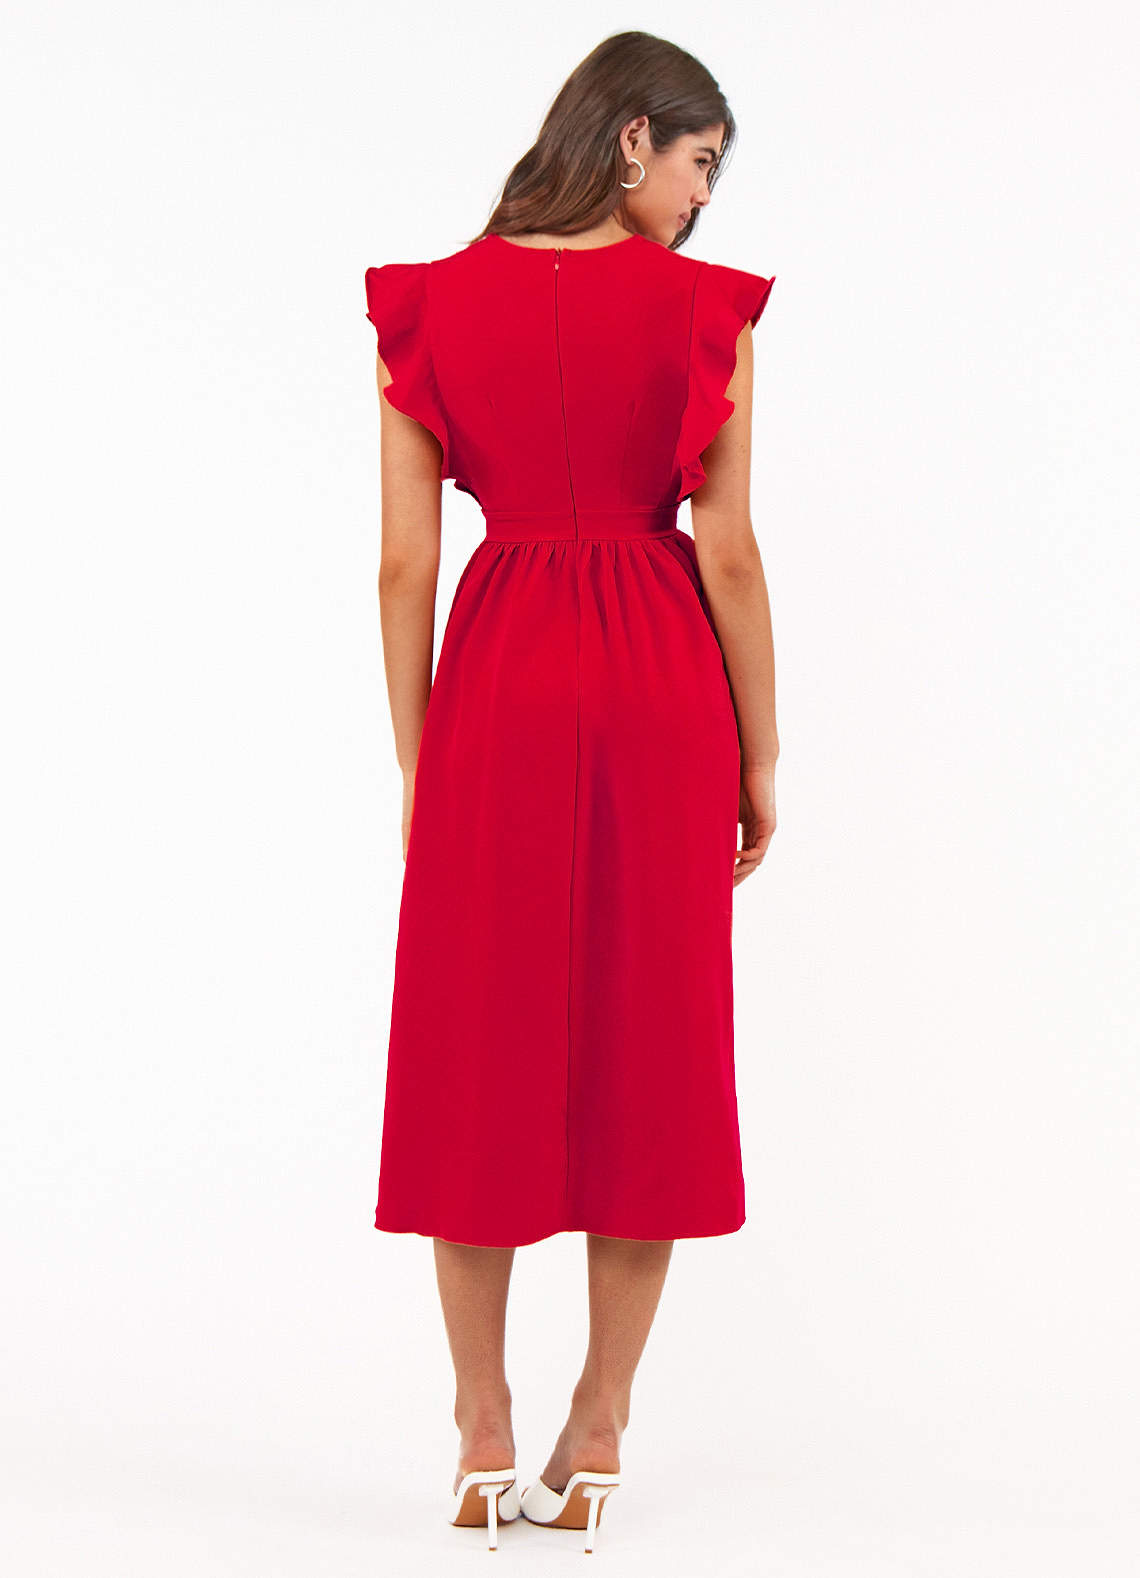 Regal Ruffles Red Satin Flutter Sleeve Midi Dress image1